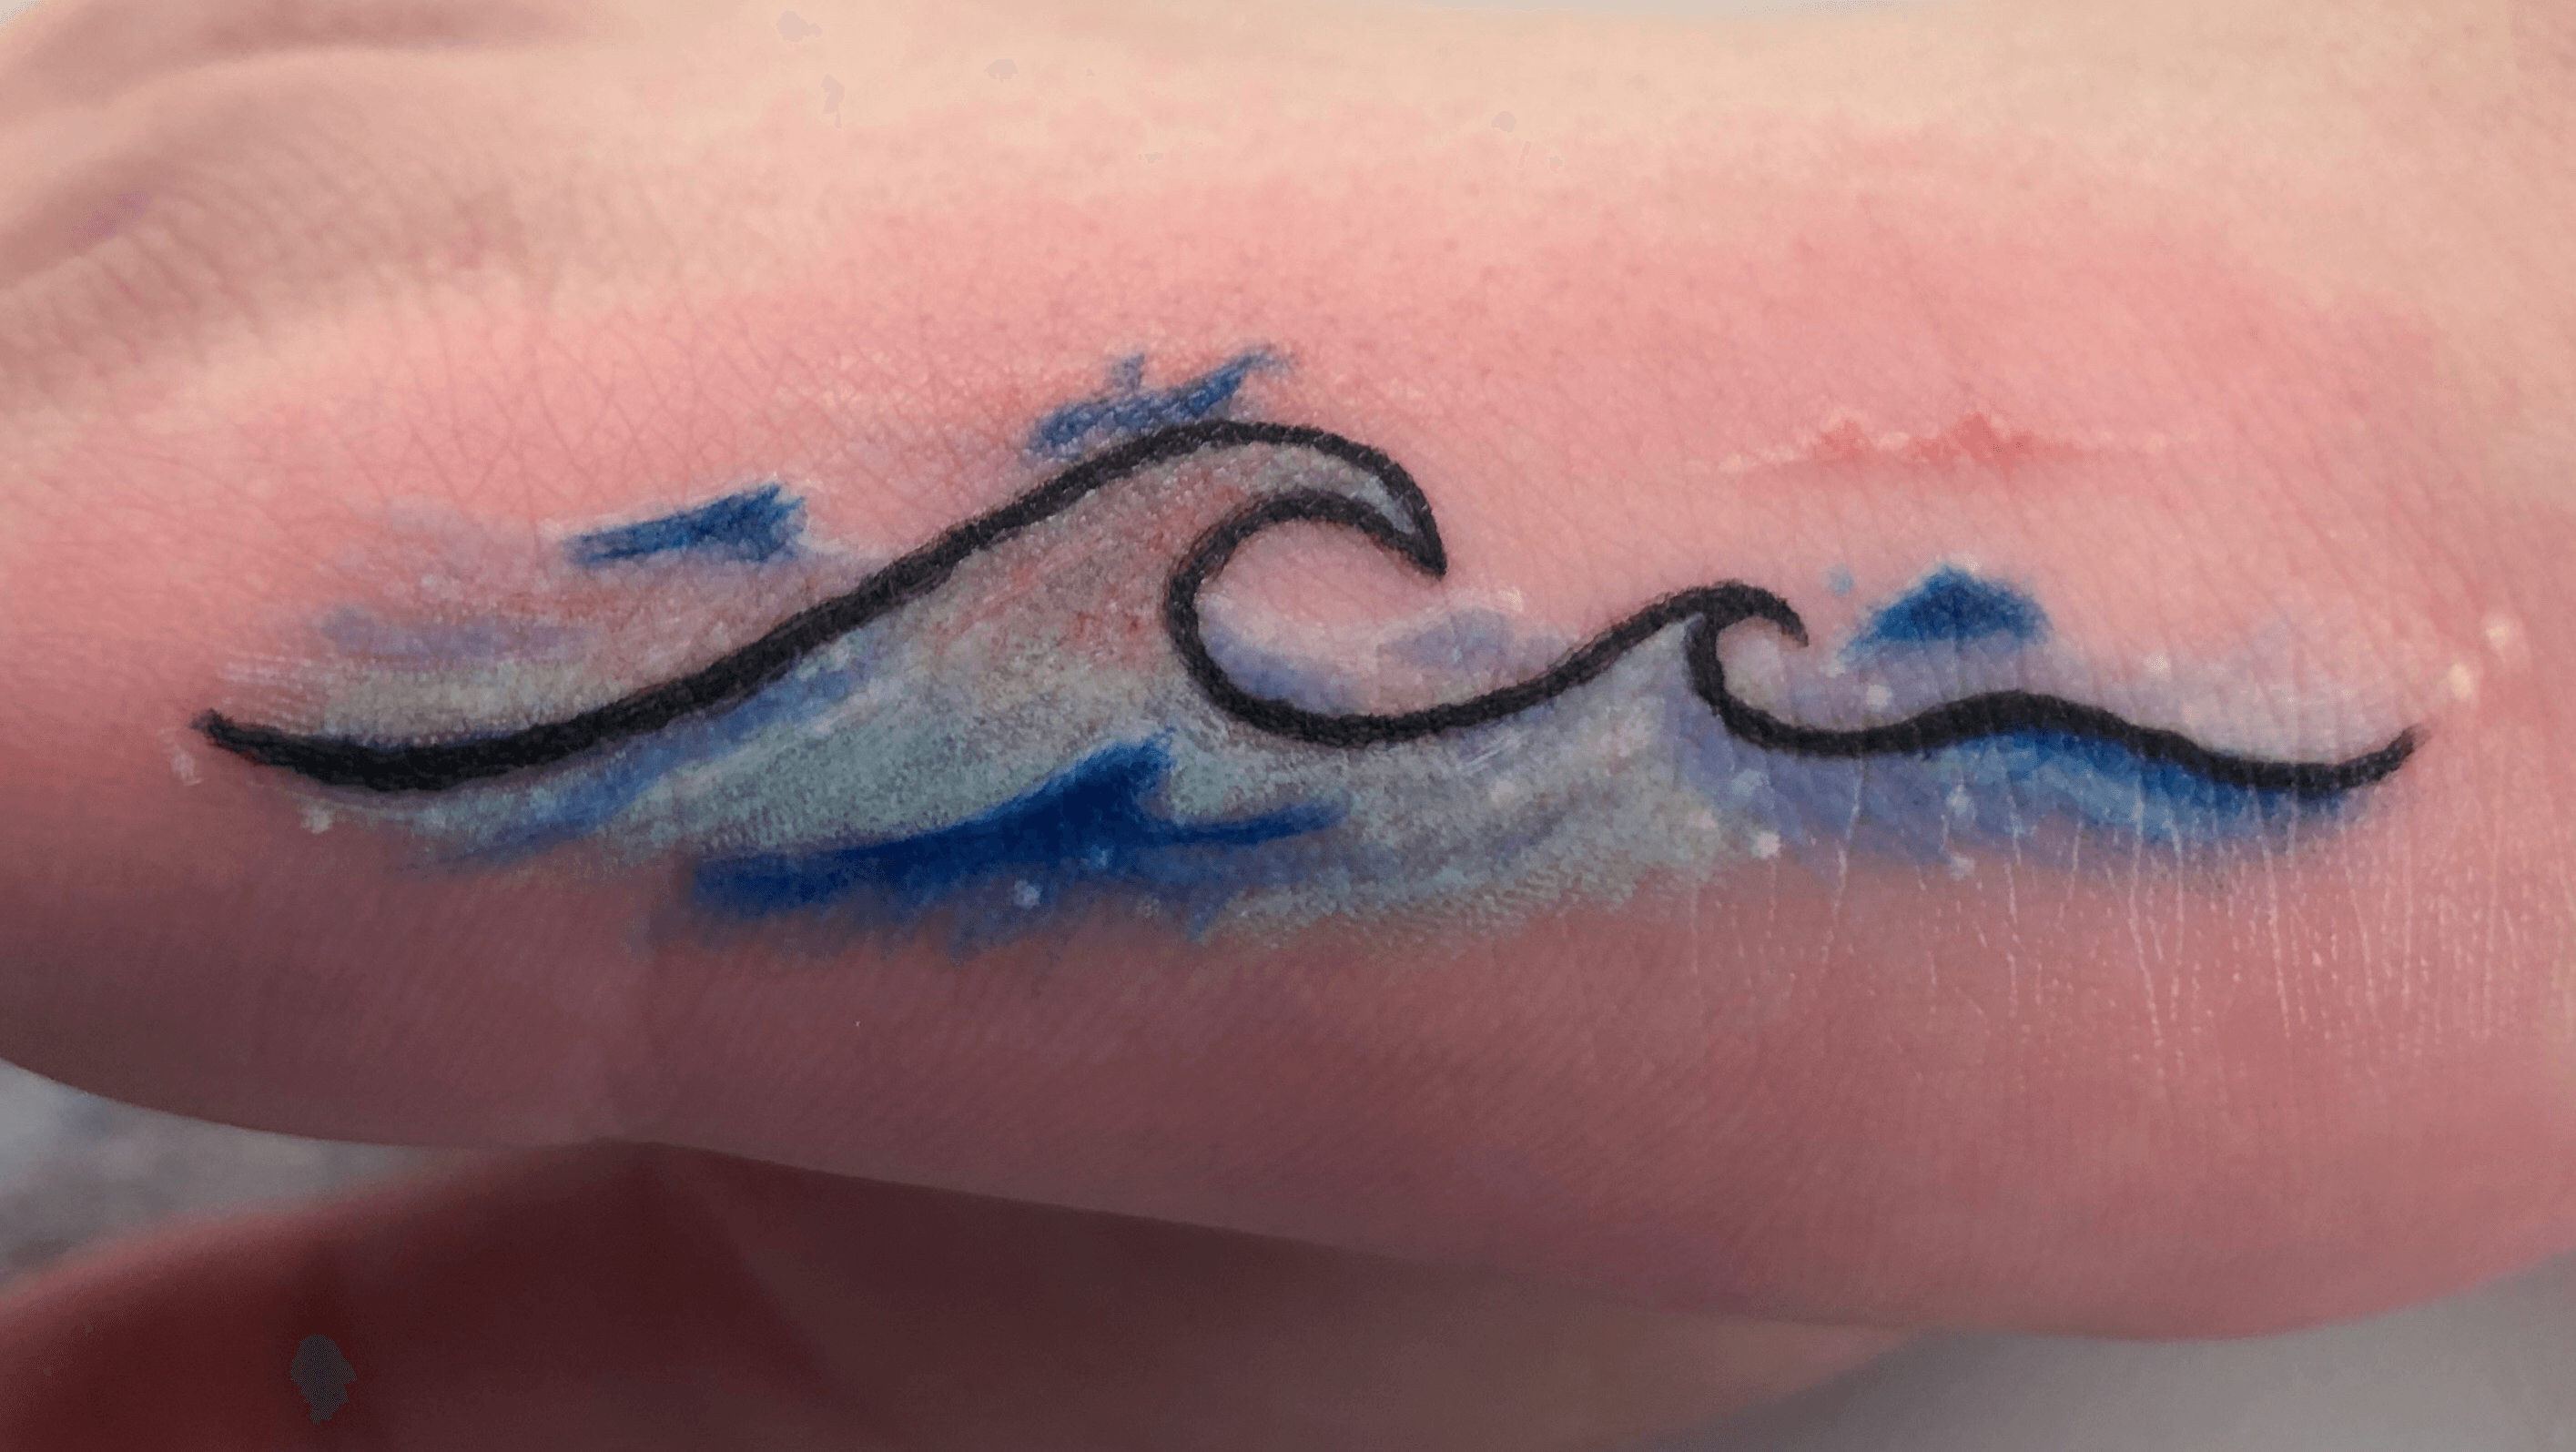 ocean wave tattoo